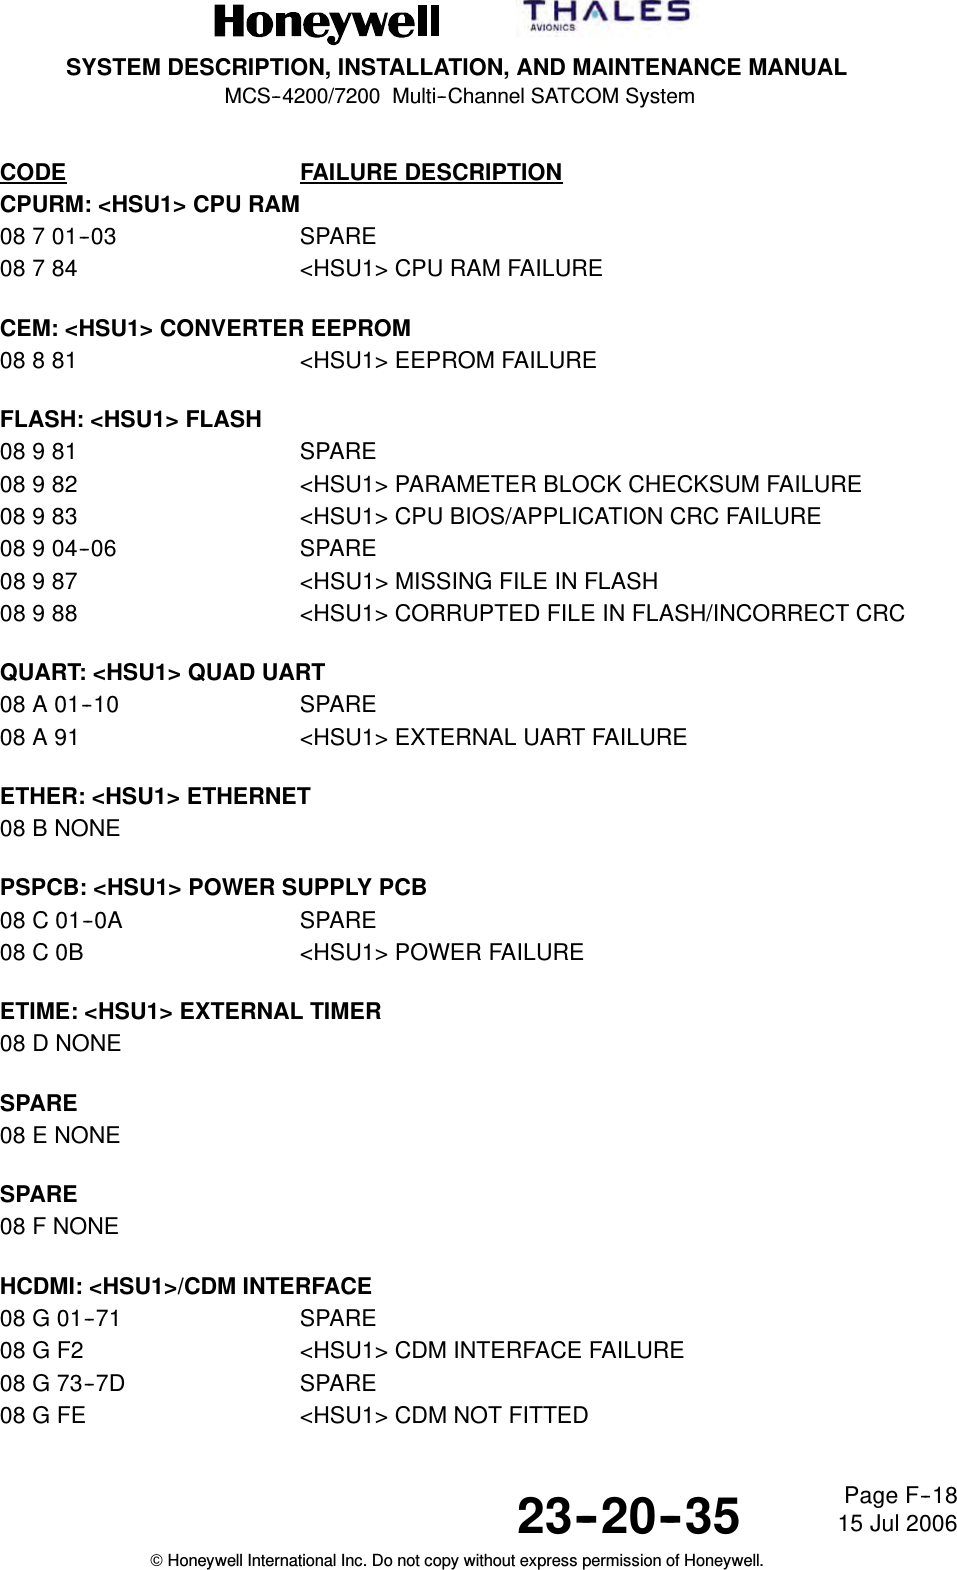 SYSTEM DESCRIPTION, INSTALLATION, AND MAINTENANCE MANUALMCS--4200/7200 Multi--Channel SATCOM System23--20--35 15 Jul 2006Honeywell International Inc. Do not copy without express permission of Honeywell.Page F--18CODE FAILURE DESCRIPTIONCPURM: &lt;HSU1&gt; CPU RAM08701--03 SPARE08 7 84 &lt;HSU1&gt; CPU RAM FAILURECEM: &lt;HSU1&gt; CONVERTER EEPROM08 8 81 &lt;HSU1&gt; EEPROM FAILUREFLASH: &lt;HSU1&gt; FLASH08981 SPARE08 9 82 &lt;HSU1&gt; PARAMETER BLOCK CHECKSUM FAILURE08 9 83 &lt;HSU1&gt; CPU BIOS/APPLICATION CRC FAILURE08904--06 SPARE08 9 87 &lt;HSU1&gt; MISSING FILE IN FLASH08 9 88 &lt;HSU1&gt; CORRUPTED FILE IN FLASH/INCORRECT CRCQUART: &lt;HSU1&gt; QUAD UART08 A 01--10 SPARE08 A 91 &lt;HSU1&gt; EXTERNAL UART FAILUREETHER: &lt;HSU1&gt; ETHERNET08 B NONEPSPCB: &lt;HSU1&gt; POWER SUPPLY PCB08 C 01--0A SPARE08 C 0B &lt;HSU1&gt; POWER FAILUREETIME: &lt;HSU1&gt; EXTERNAL TIMER08 D NONESPARE08 E NONESPARE08 F NONEHCDMI: &lt;HSU1&gt;/CDM INTERFACE08 G 01--71 SPARE08 G F2 &lt;HSU1&gt; CDM INTERFACE FAILURE08 G 73--7D SPARE08 G FE &lt;HSU1&gt; CDM NOT FITTED